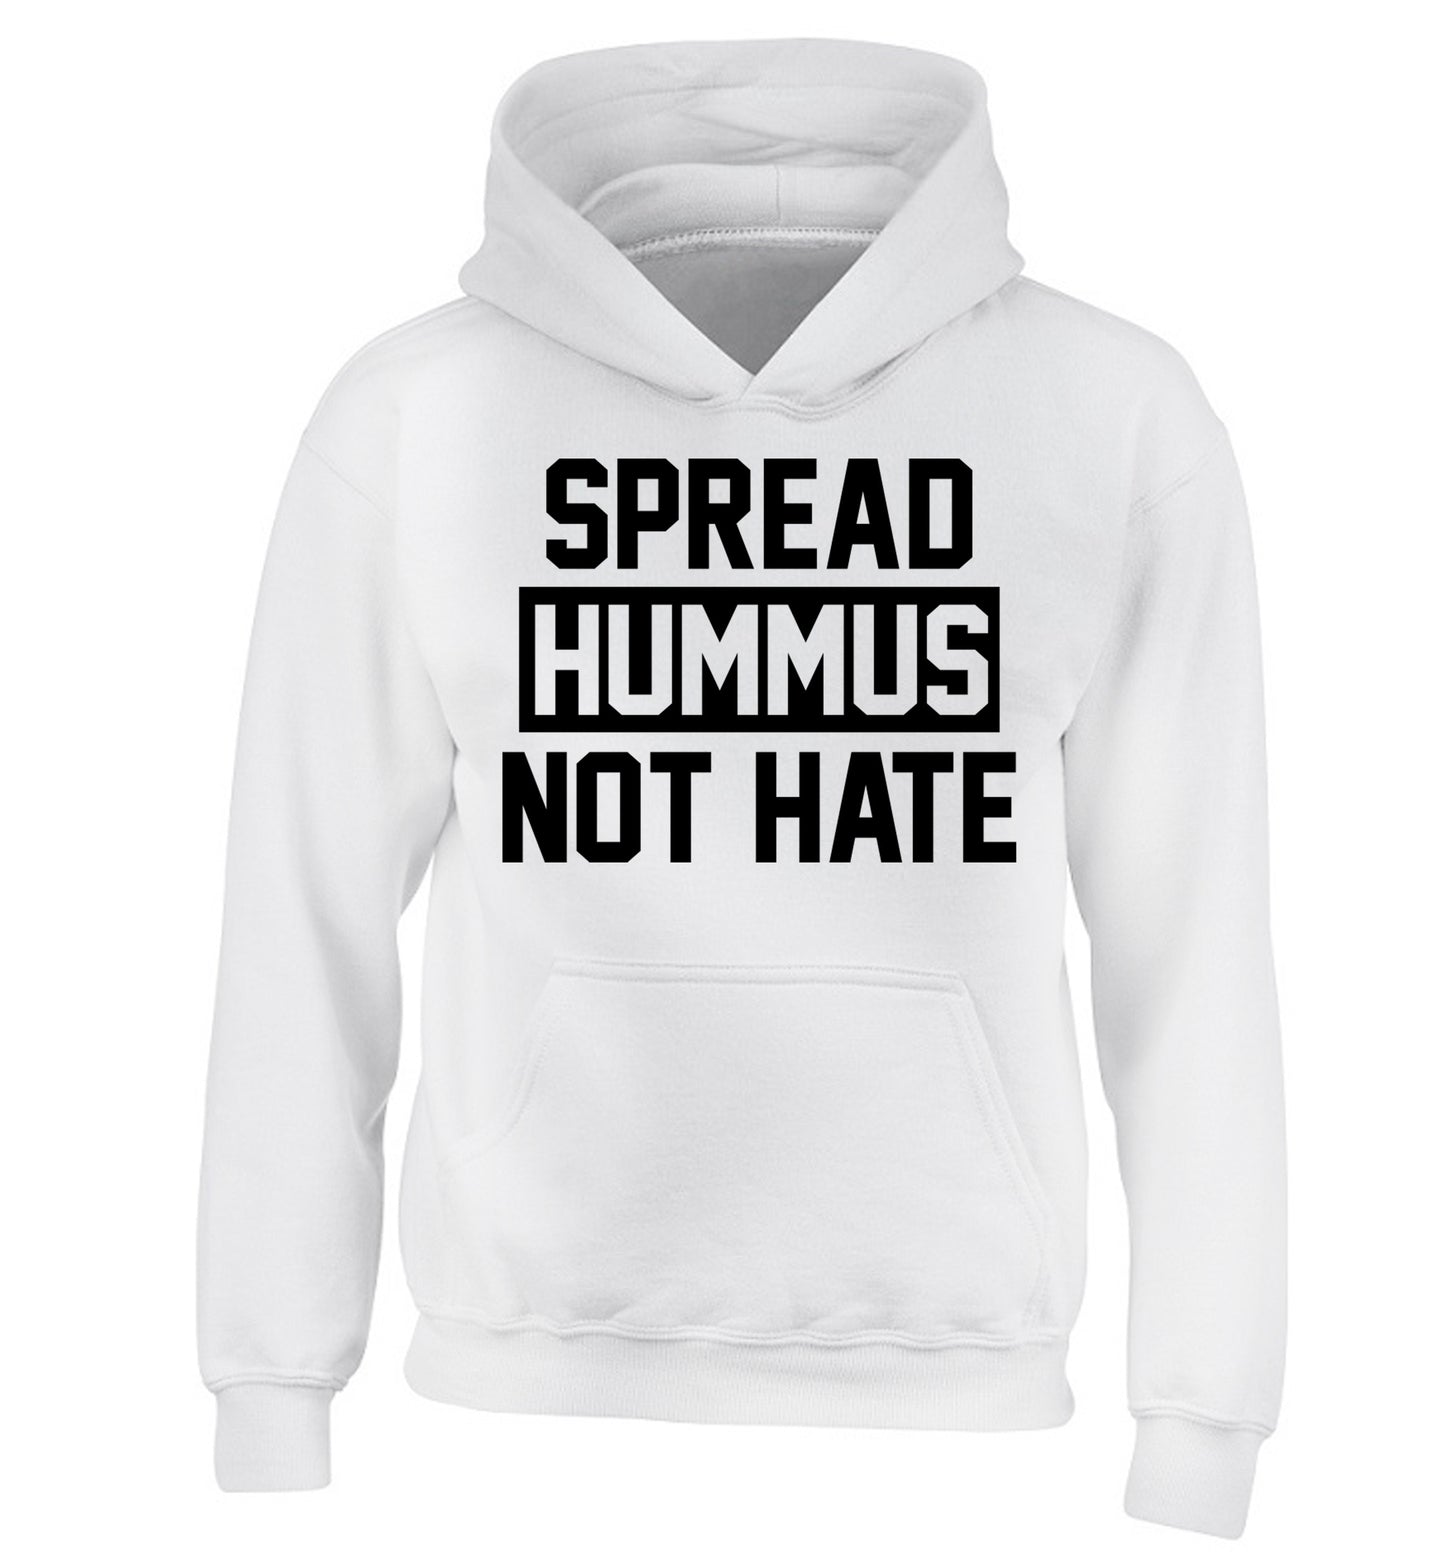 Spread hummus not hate children's white hoodie 12-14 Years